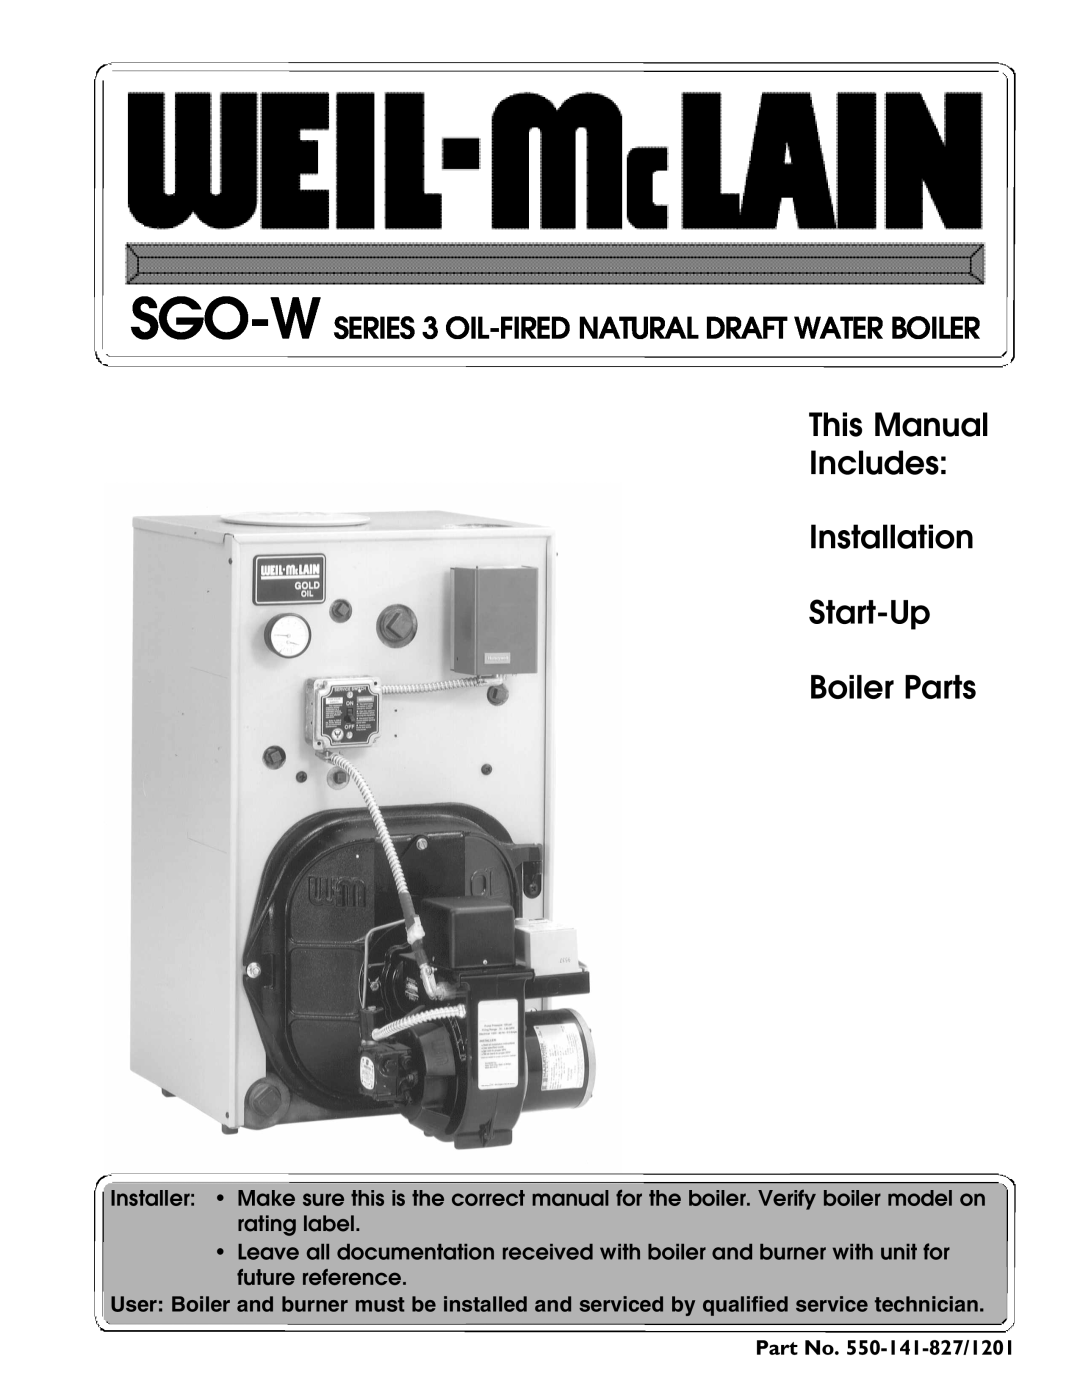 Weil-McLain SGO-W SERIES 3 OIL-FIRED NATURAL DRAFT WATER BOILER manual Part No. 550-141-827/1201 